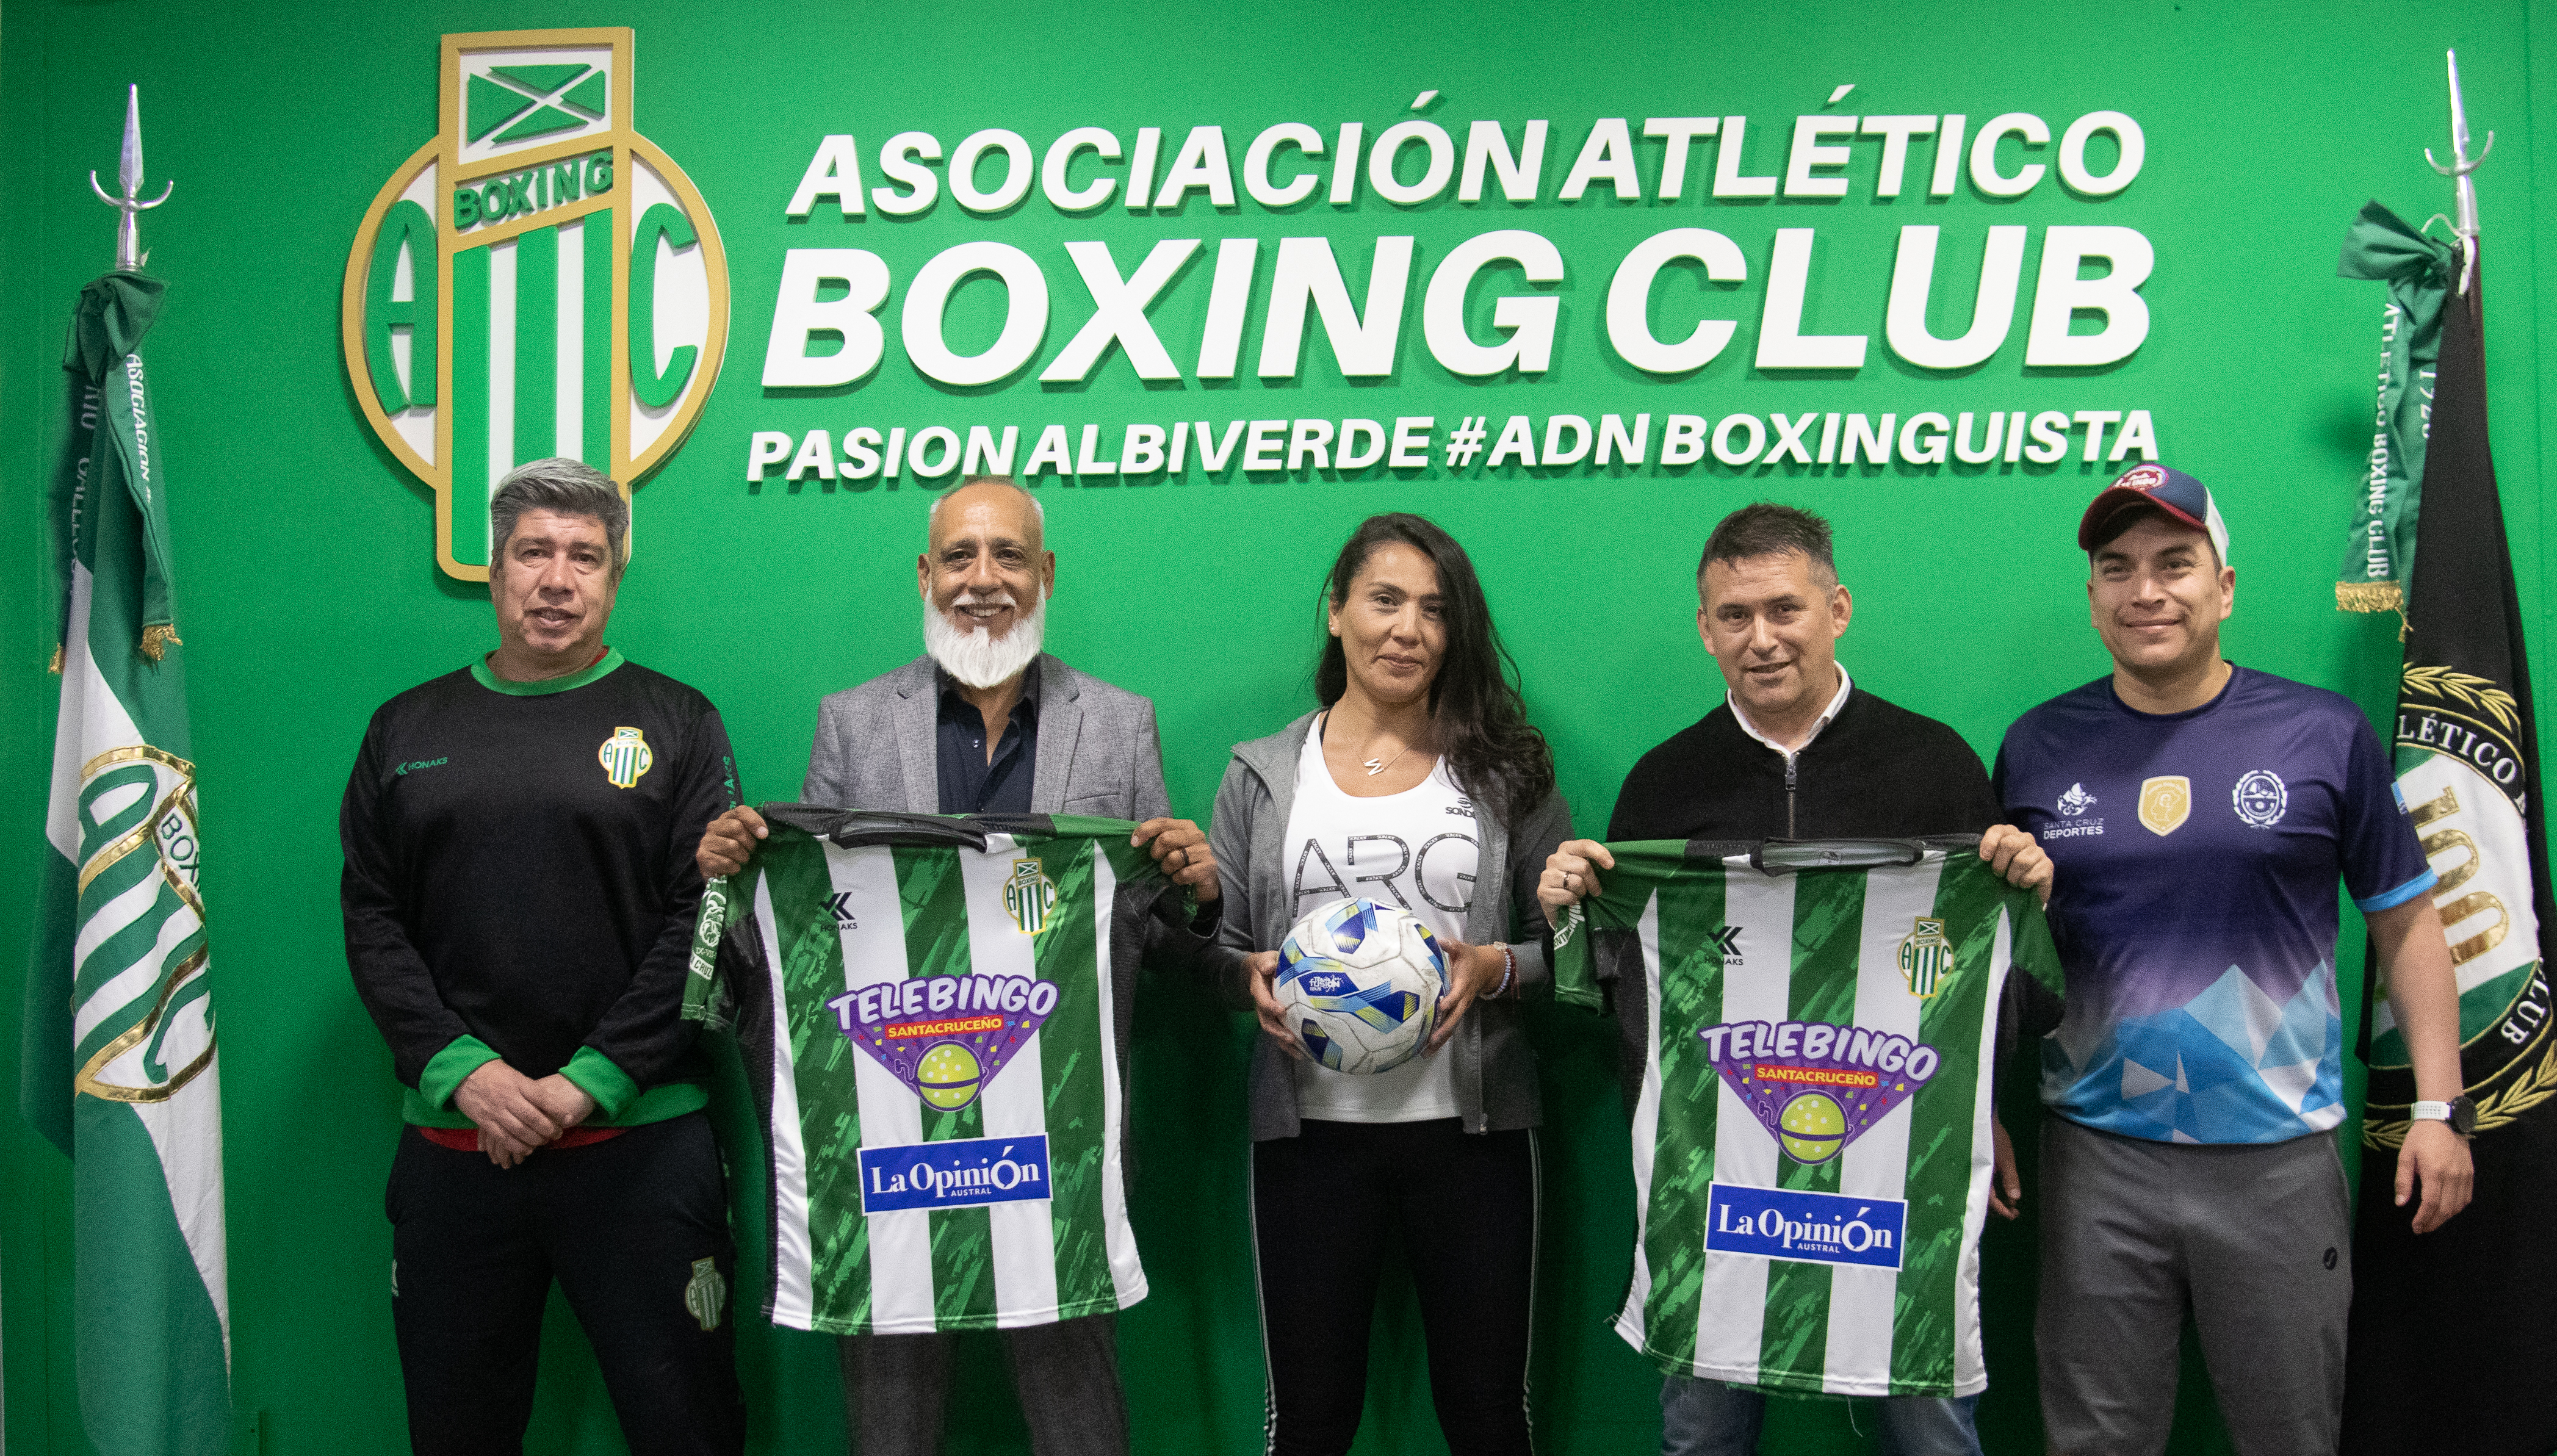 Atletico-boxing-club-La-opinion-austral-camisetas-sponsor-728x415